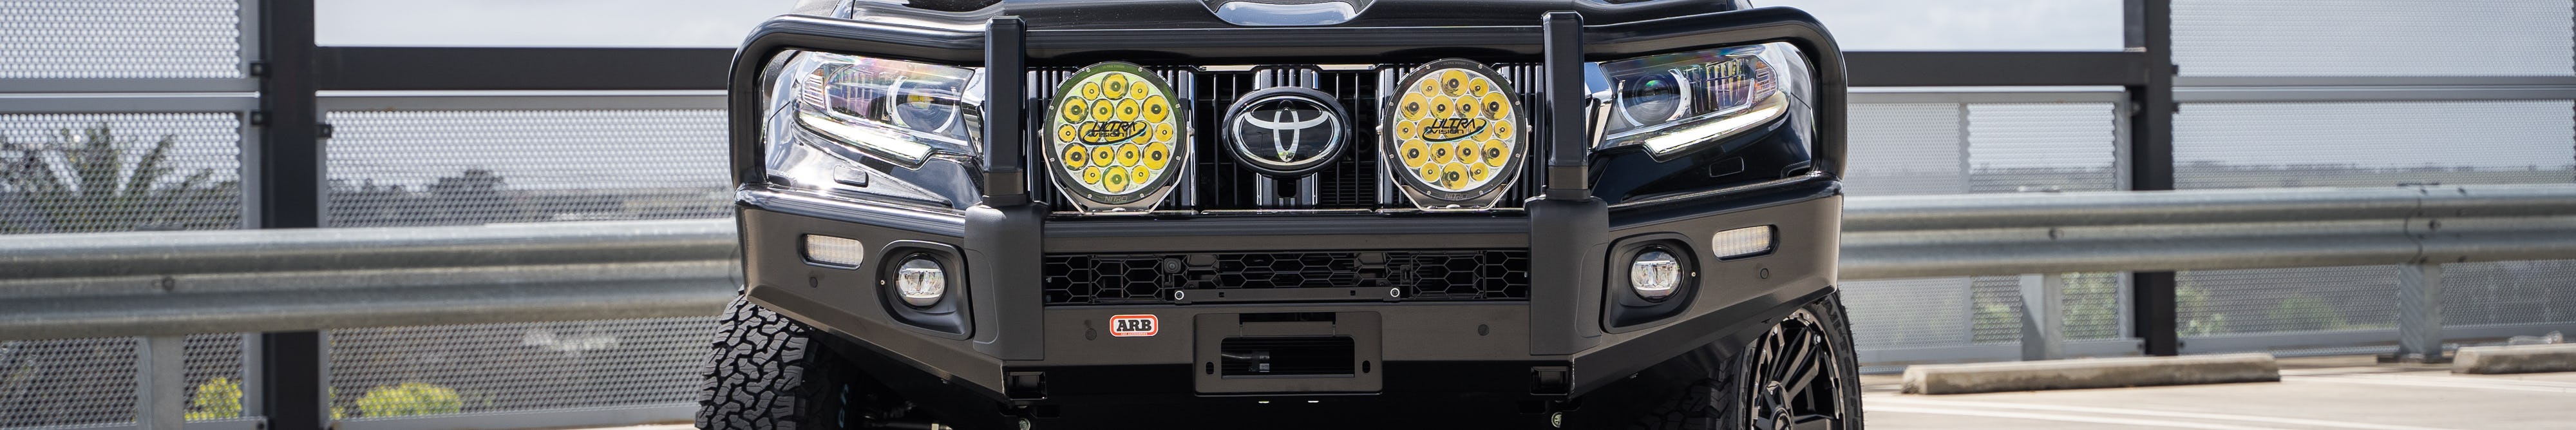 Black Toyota Prado 150 Build with ARB Bullbar & Ultra Vision 140 MAXX lights